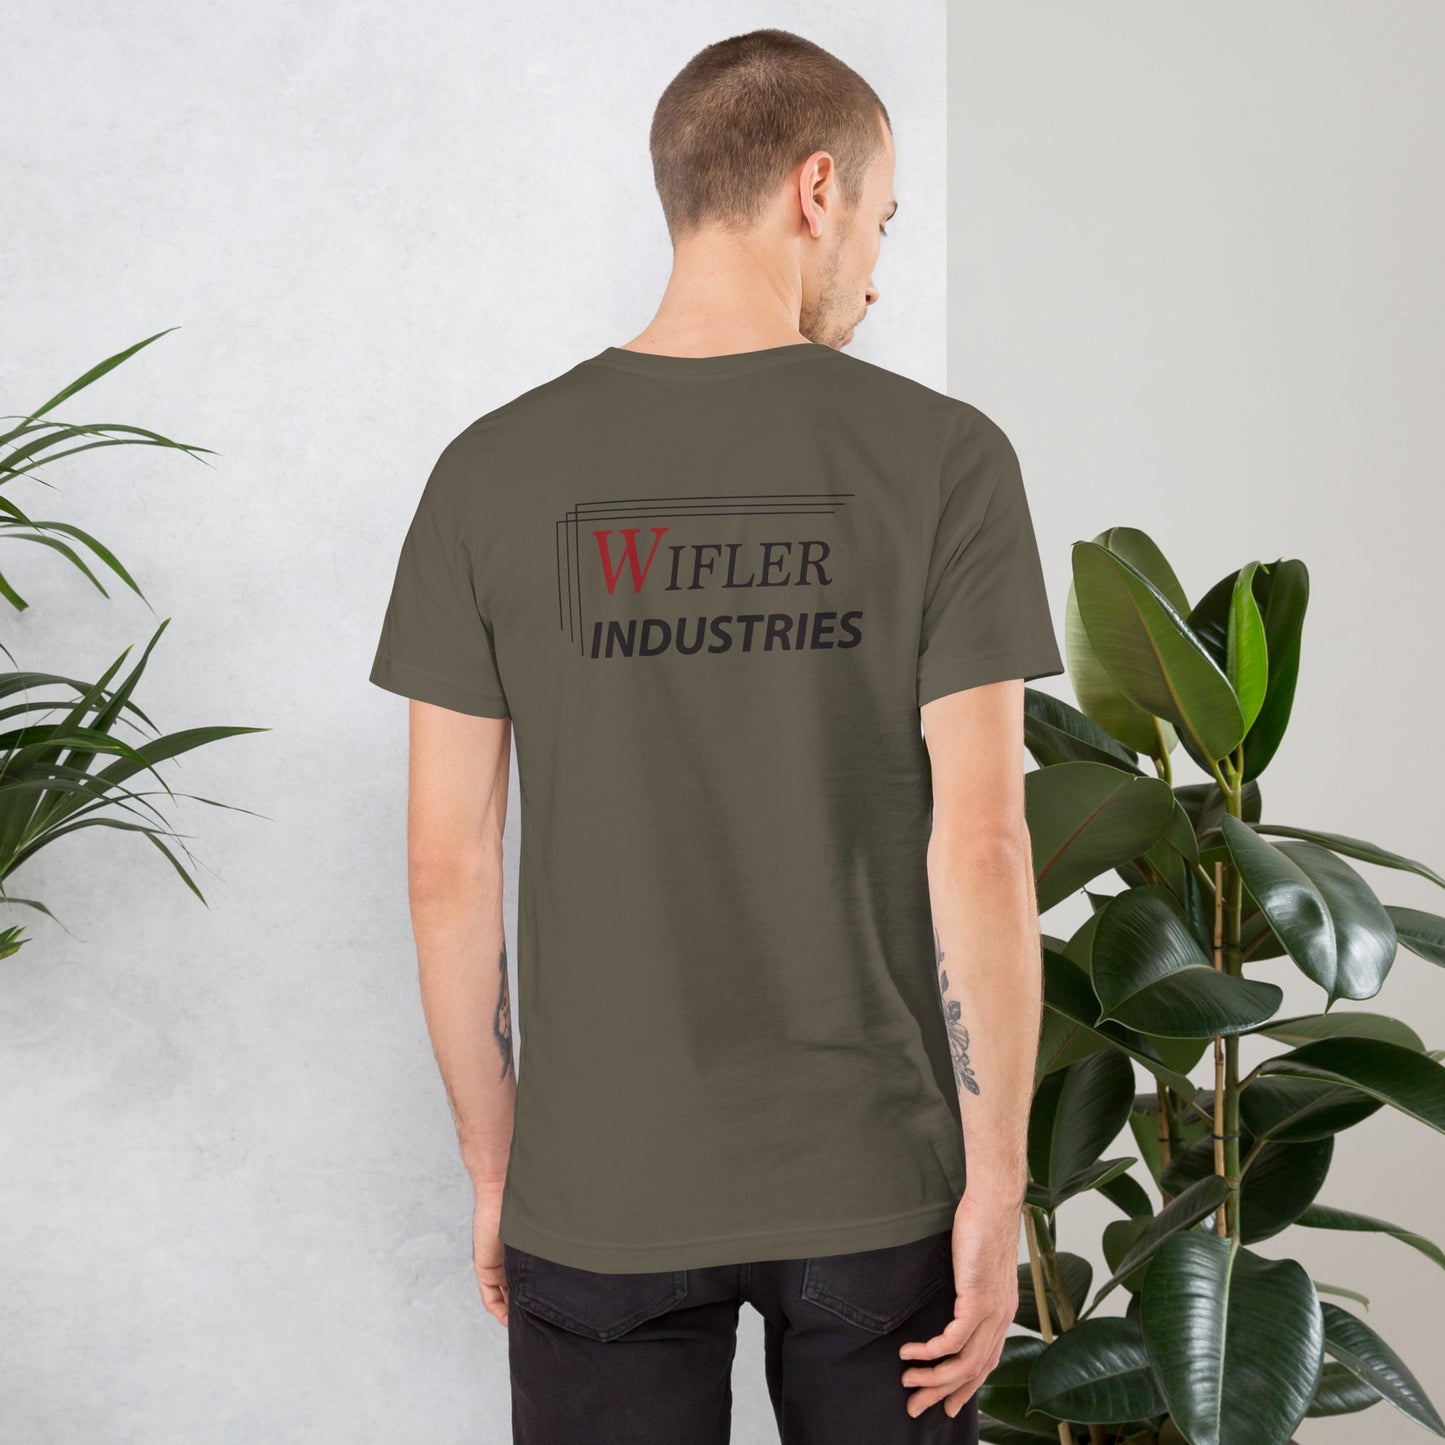 Unisex t-shirt - Wifler Industries--Wifler Industries-6397167_8440--Army-S--Unisex t-shirt-